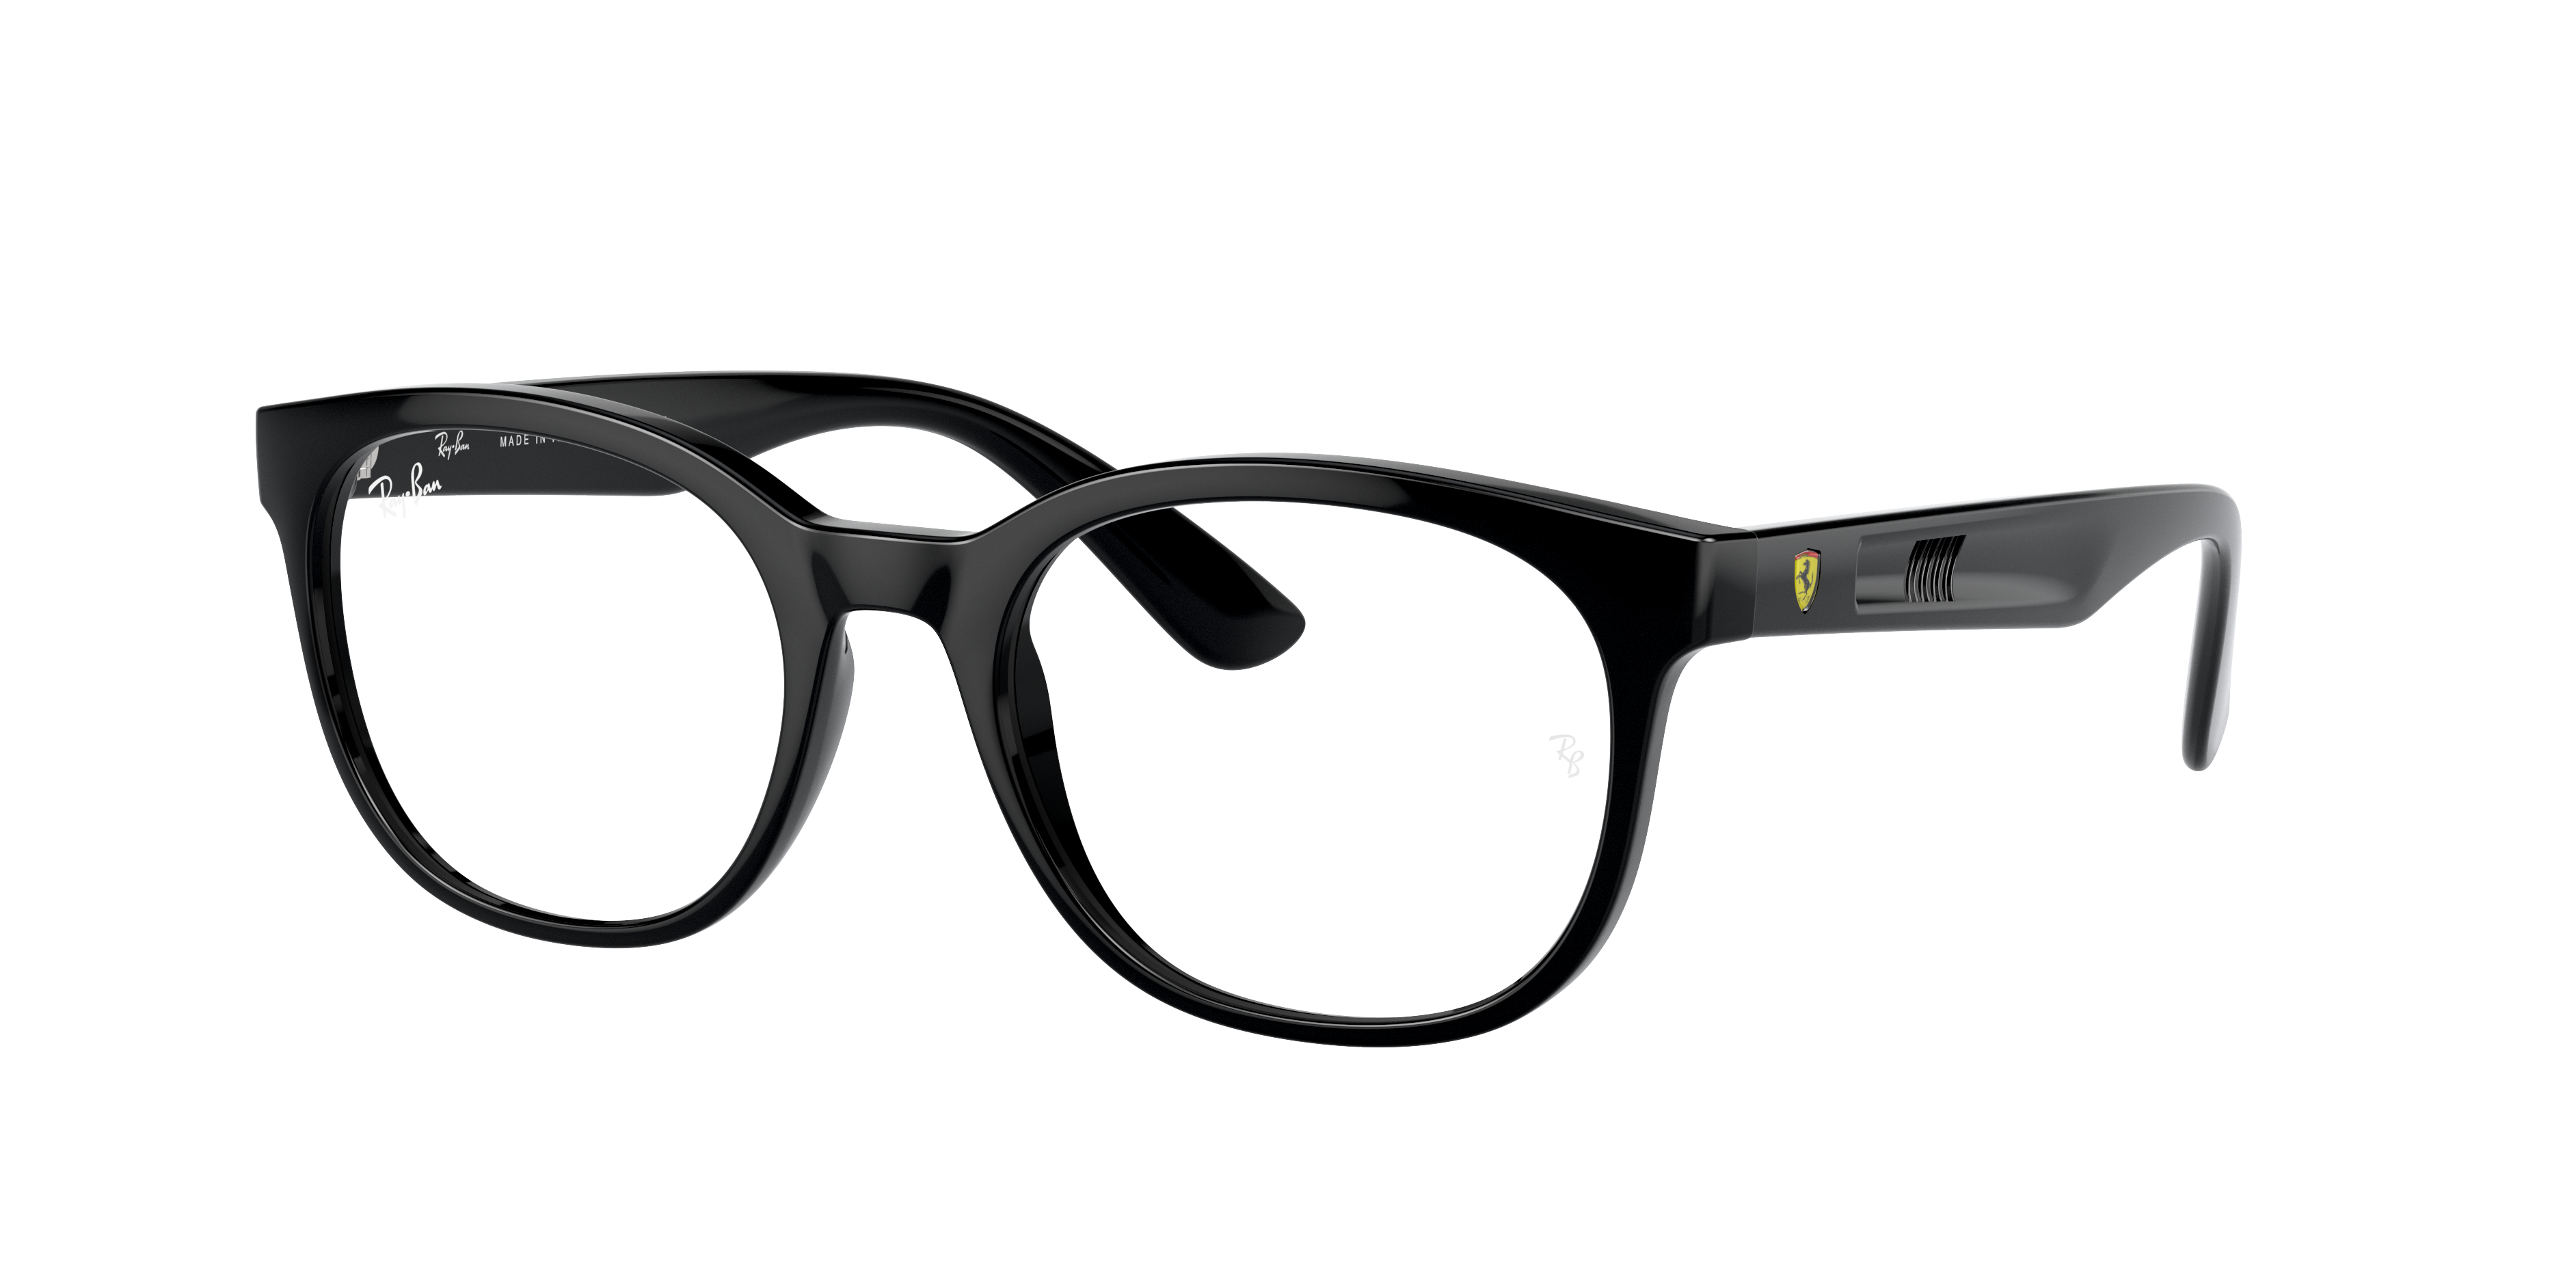 Rb7231m Optics Scuderia Ferrari Collection Eyeglasses with Black Frame ...